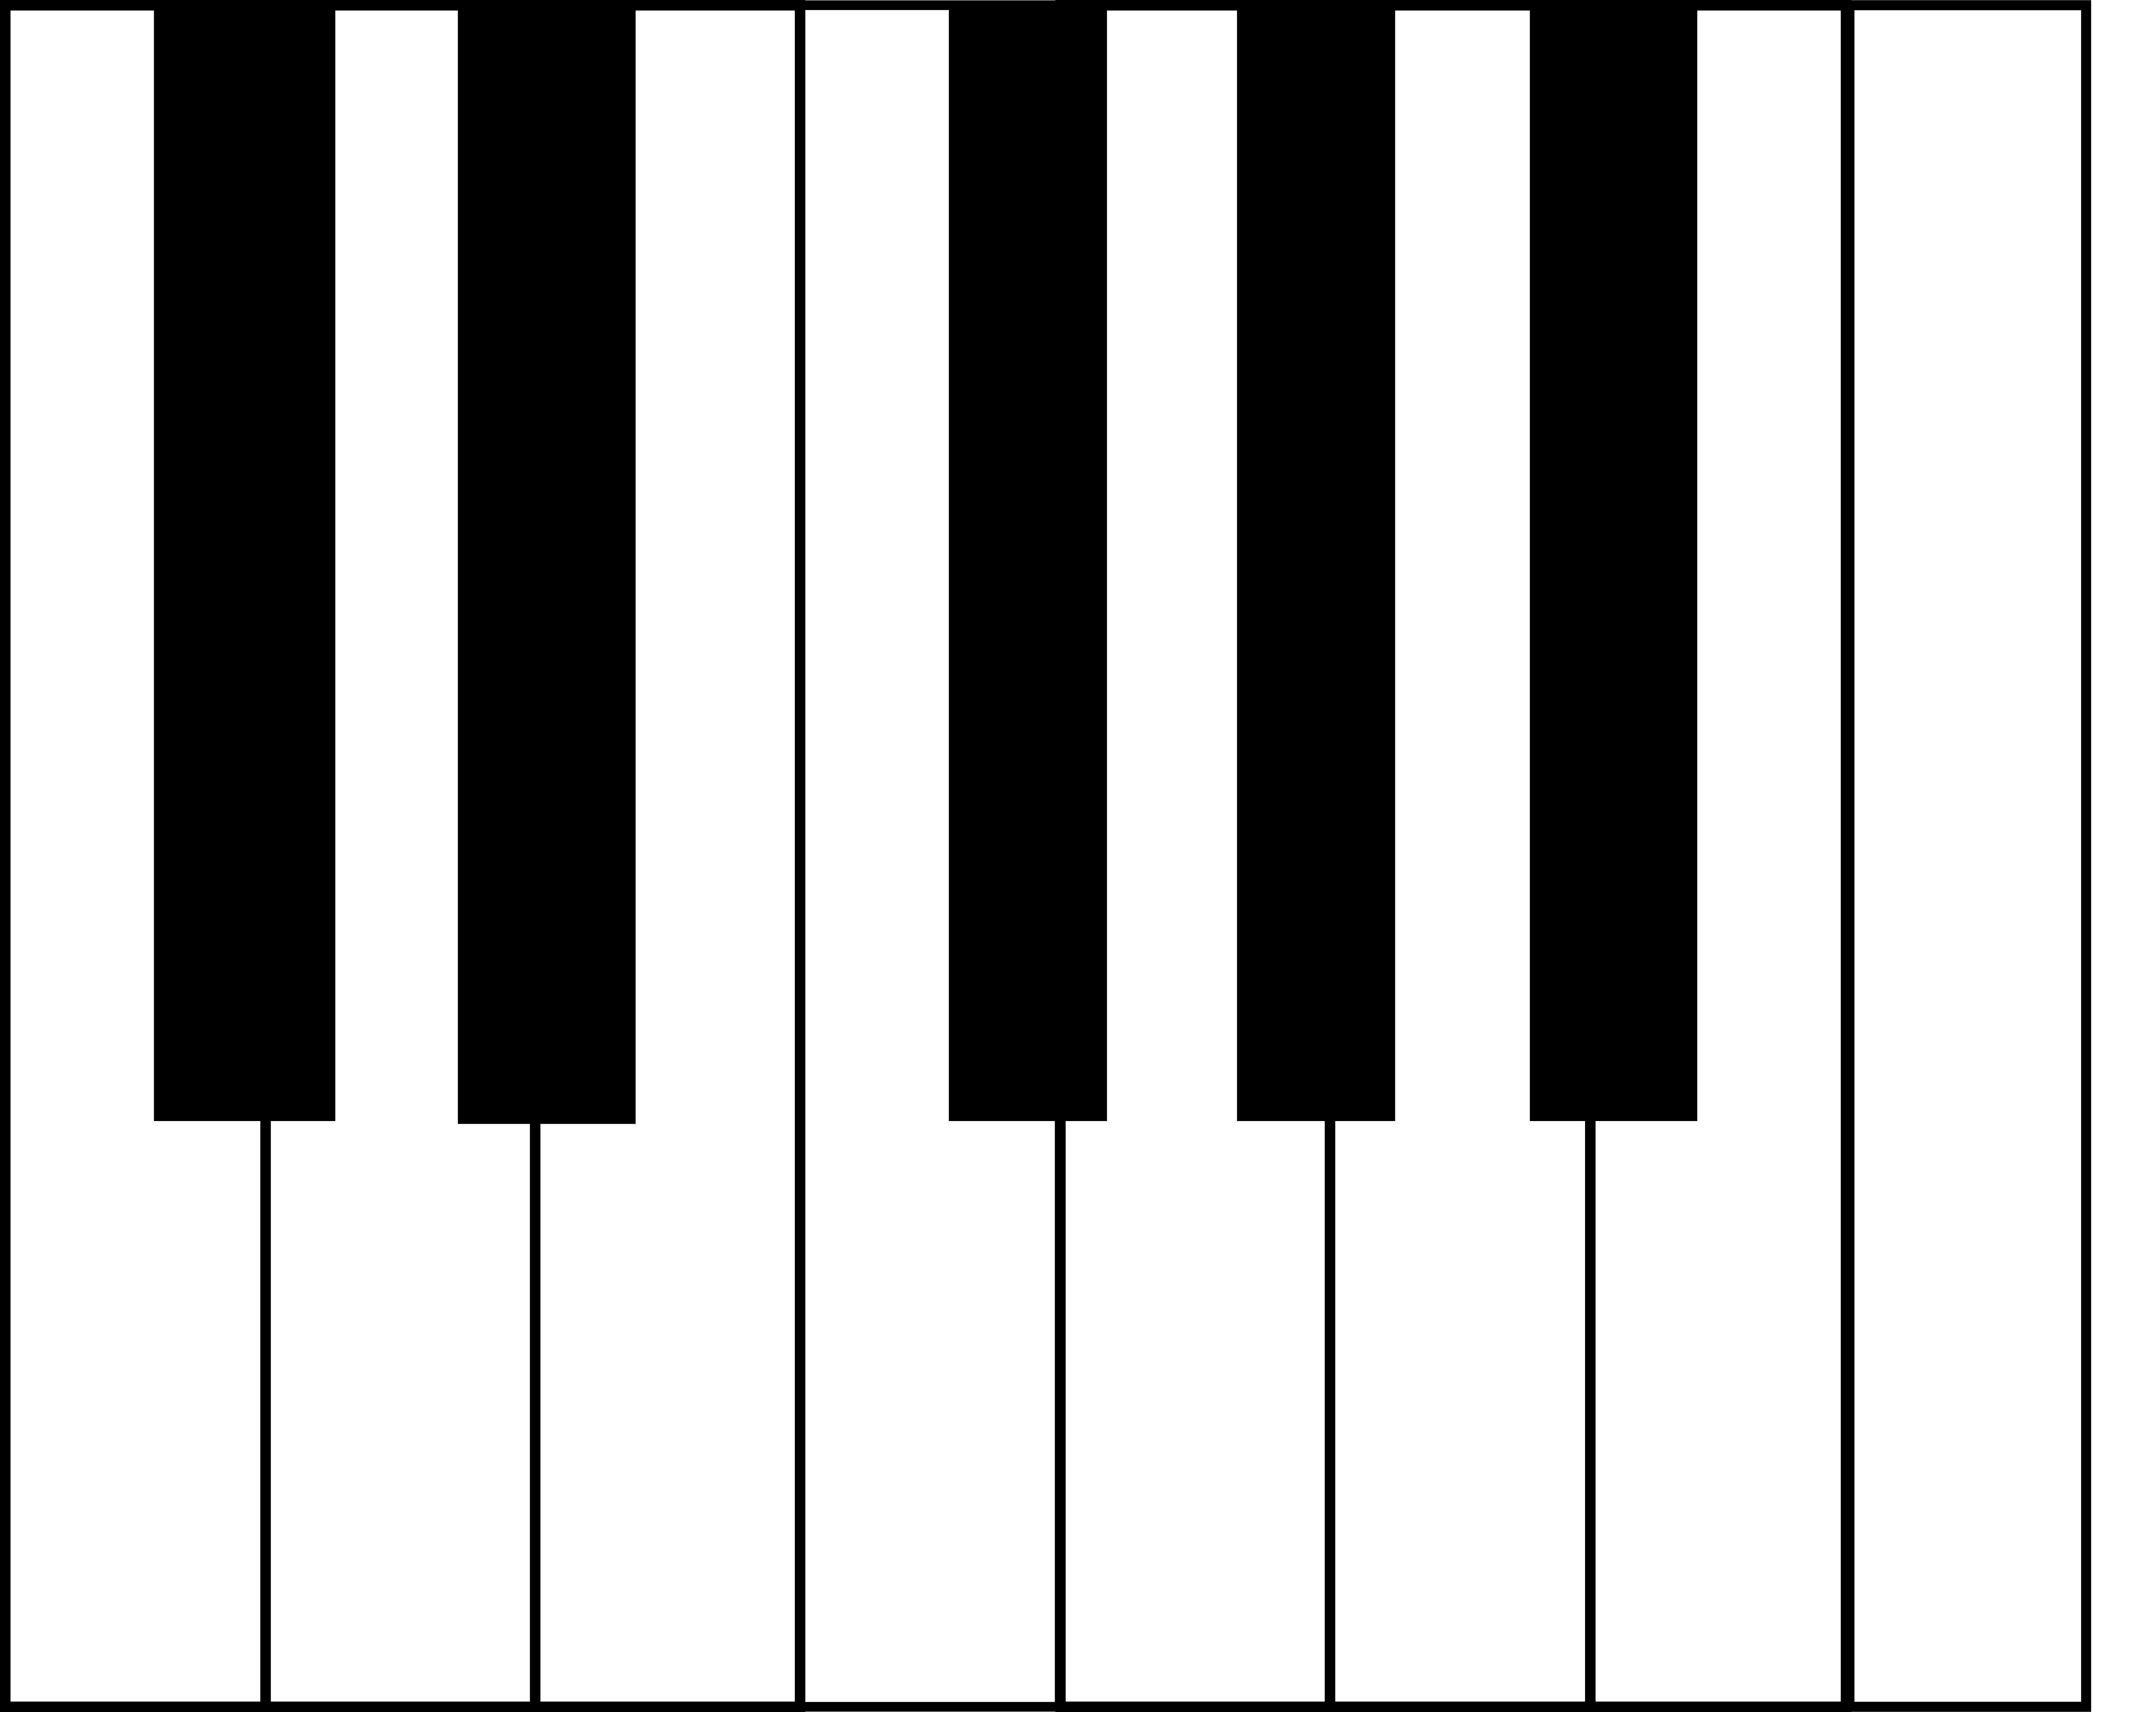 piano clipart octave